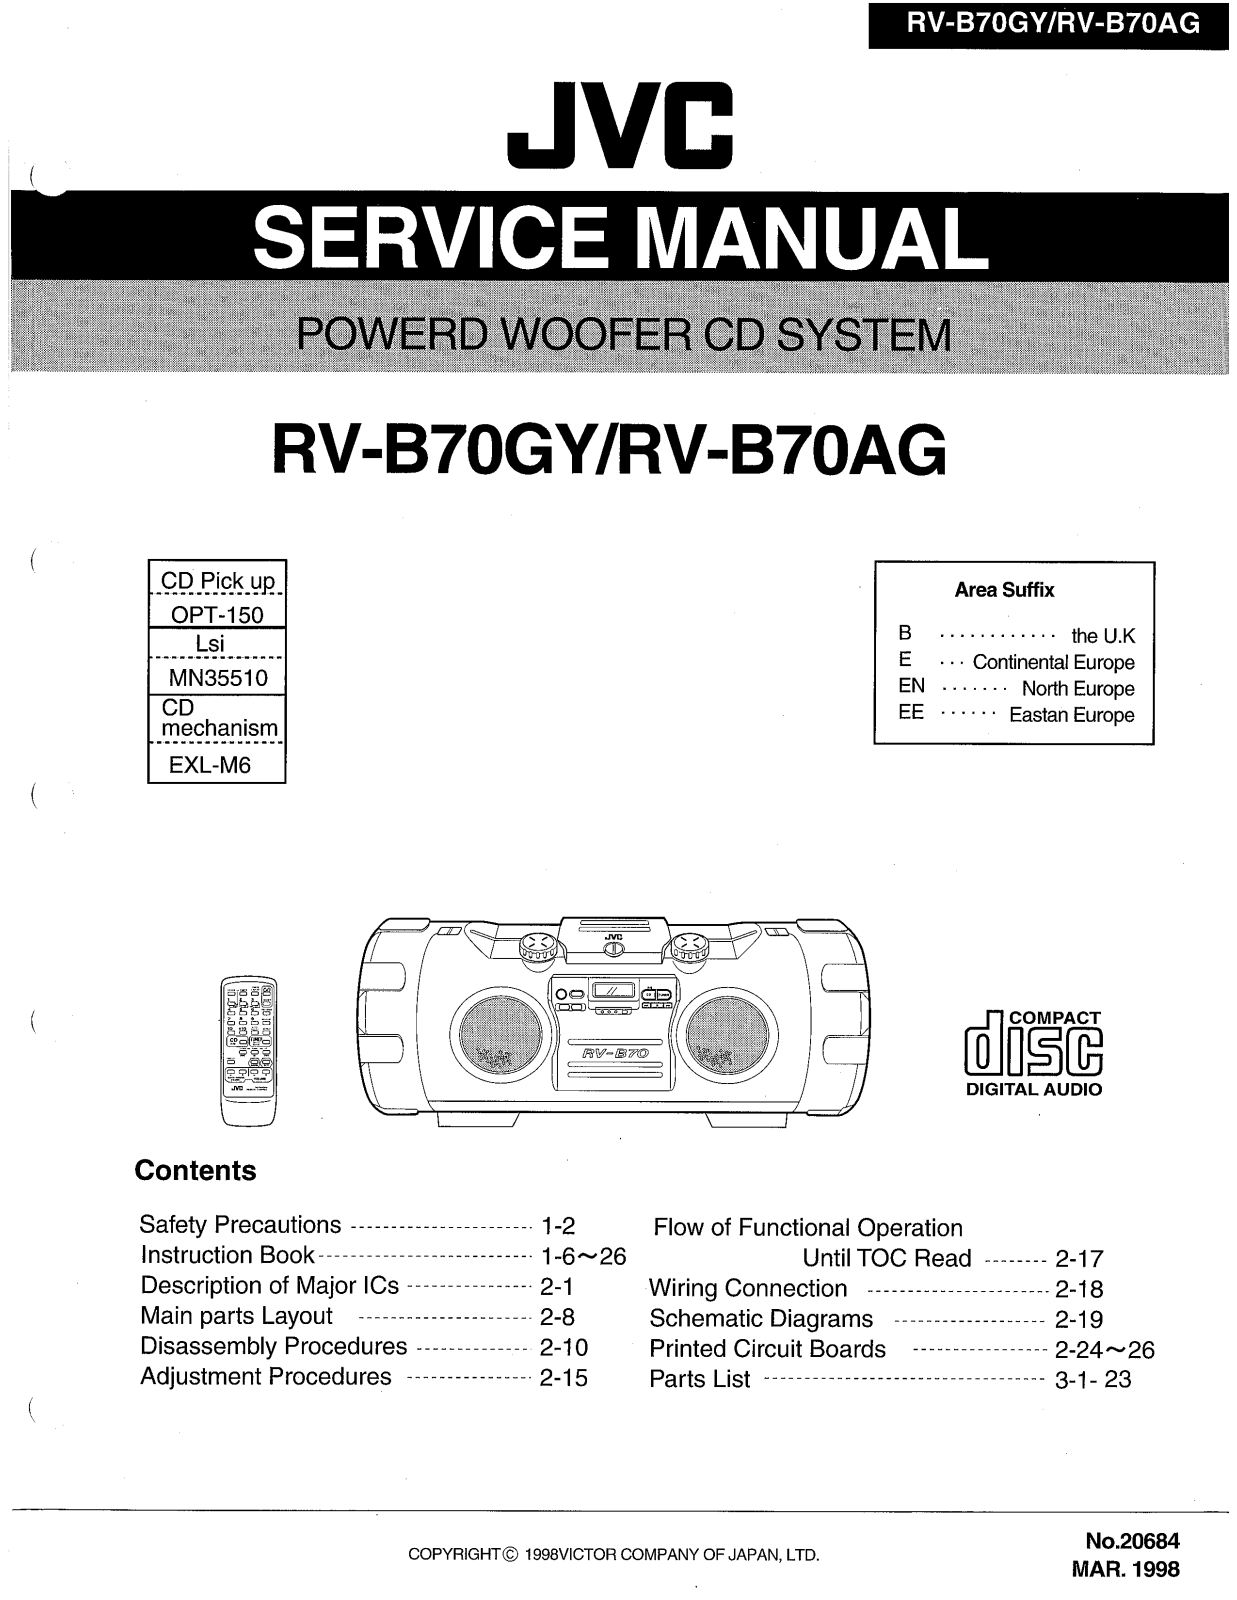 Jvc RV-B70-GY Service Manual